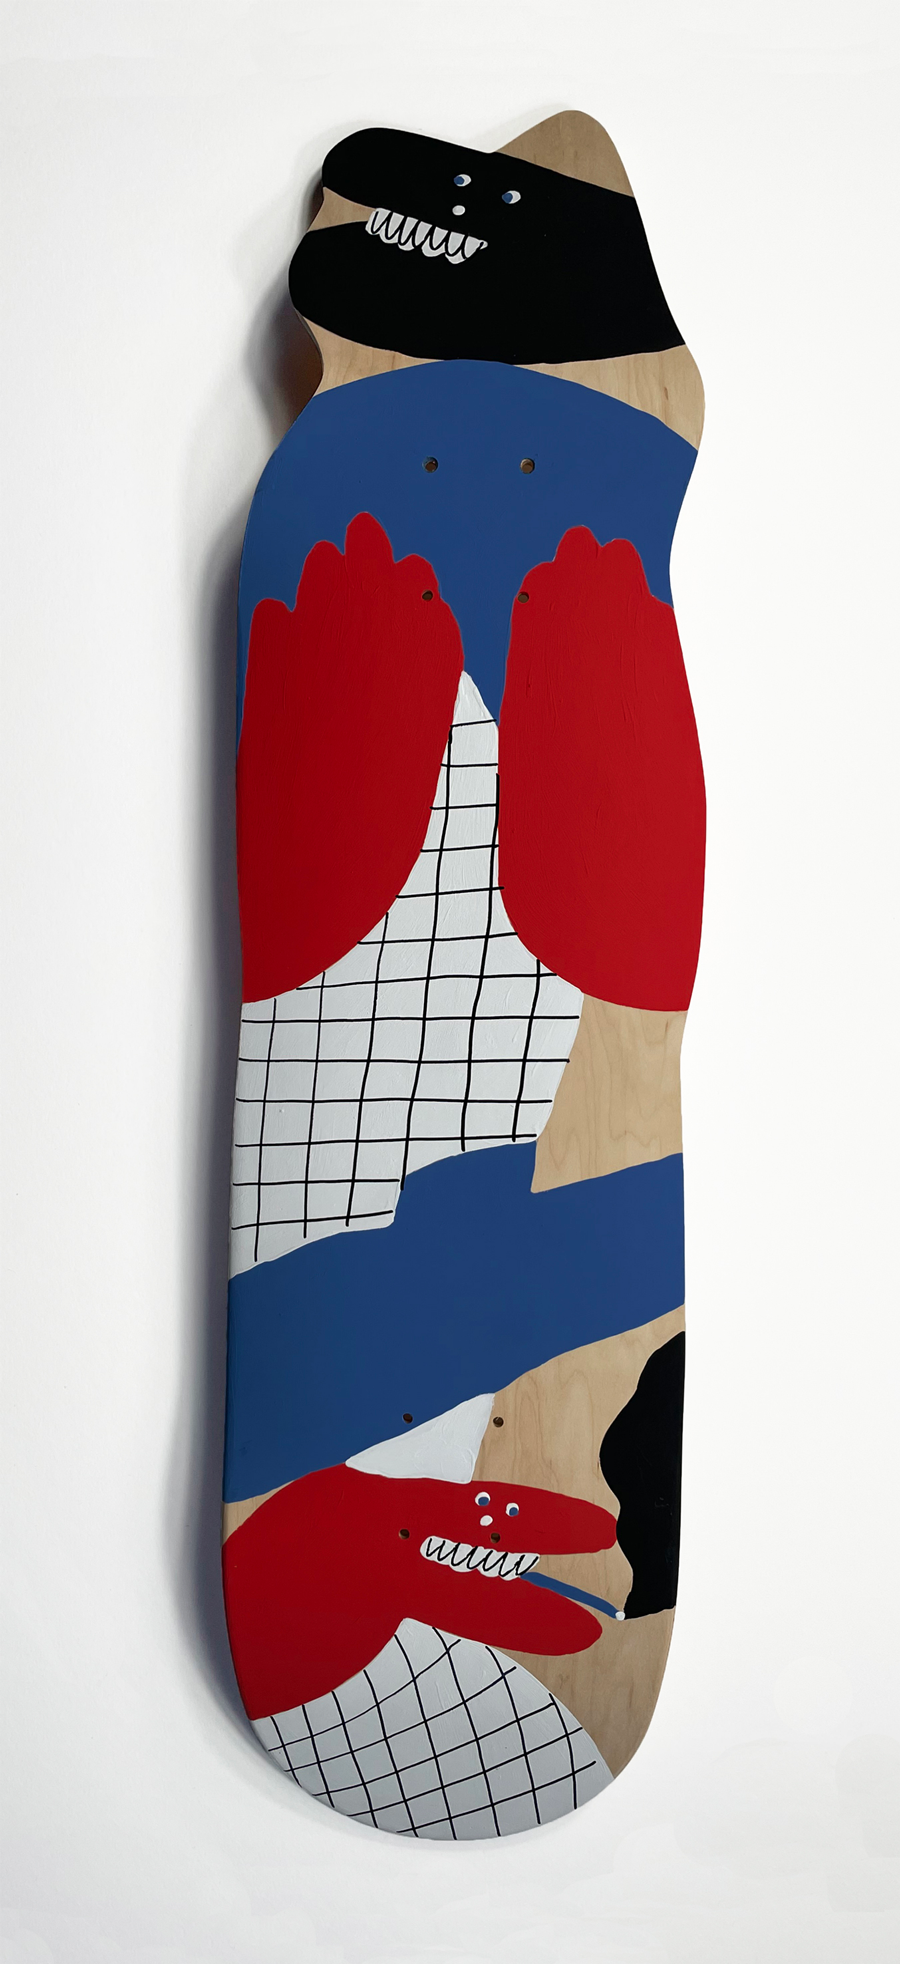 Lucas-Beaufort,-Barabarus,-12-of-21,-acrylic-on-skateboard,-80x22x1-cm